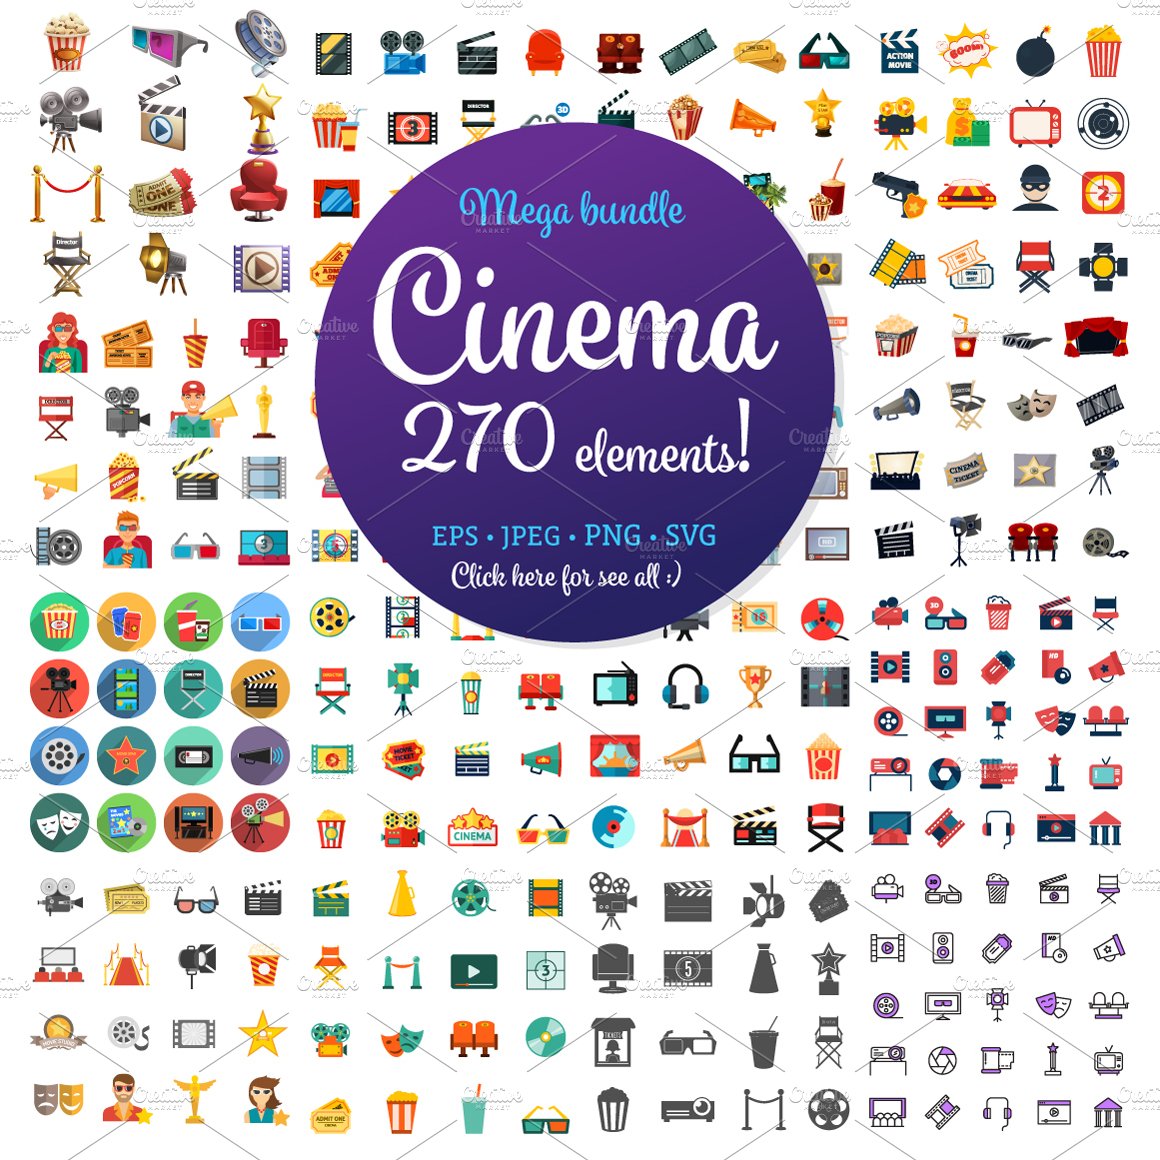 Mega Cinema Icons Set cover image.